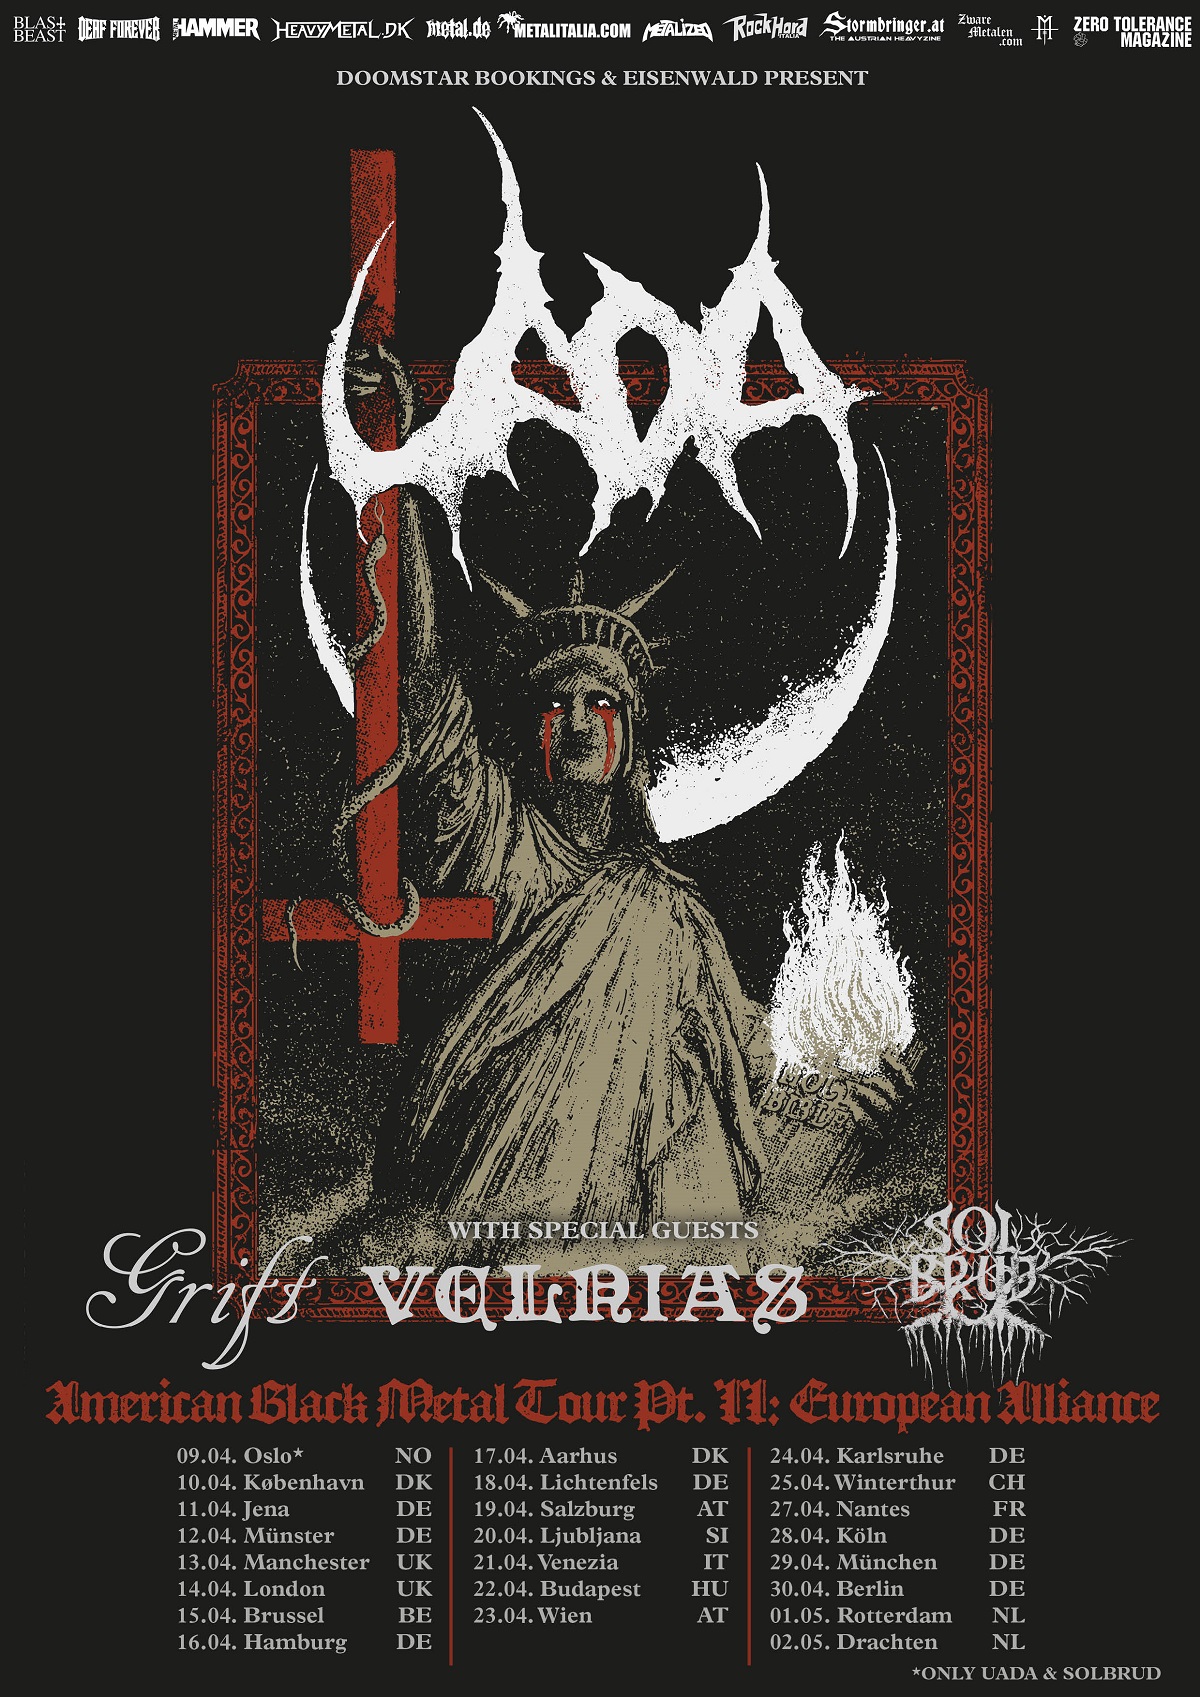 American Black Metal Tour Pt II European Alliance